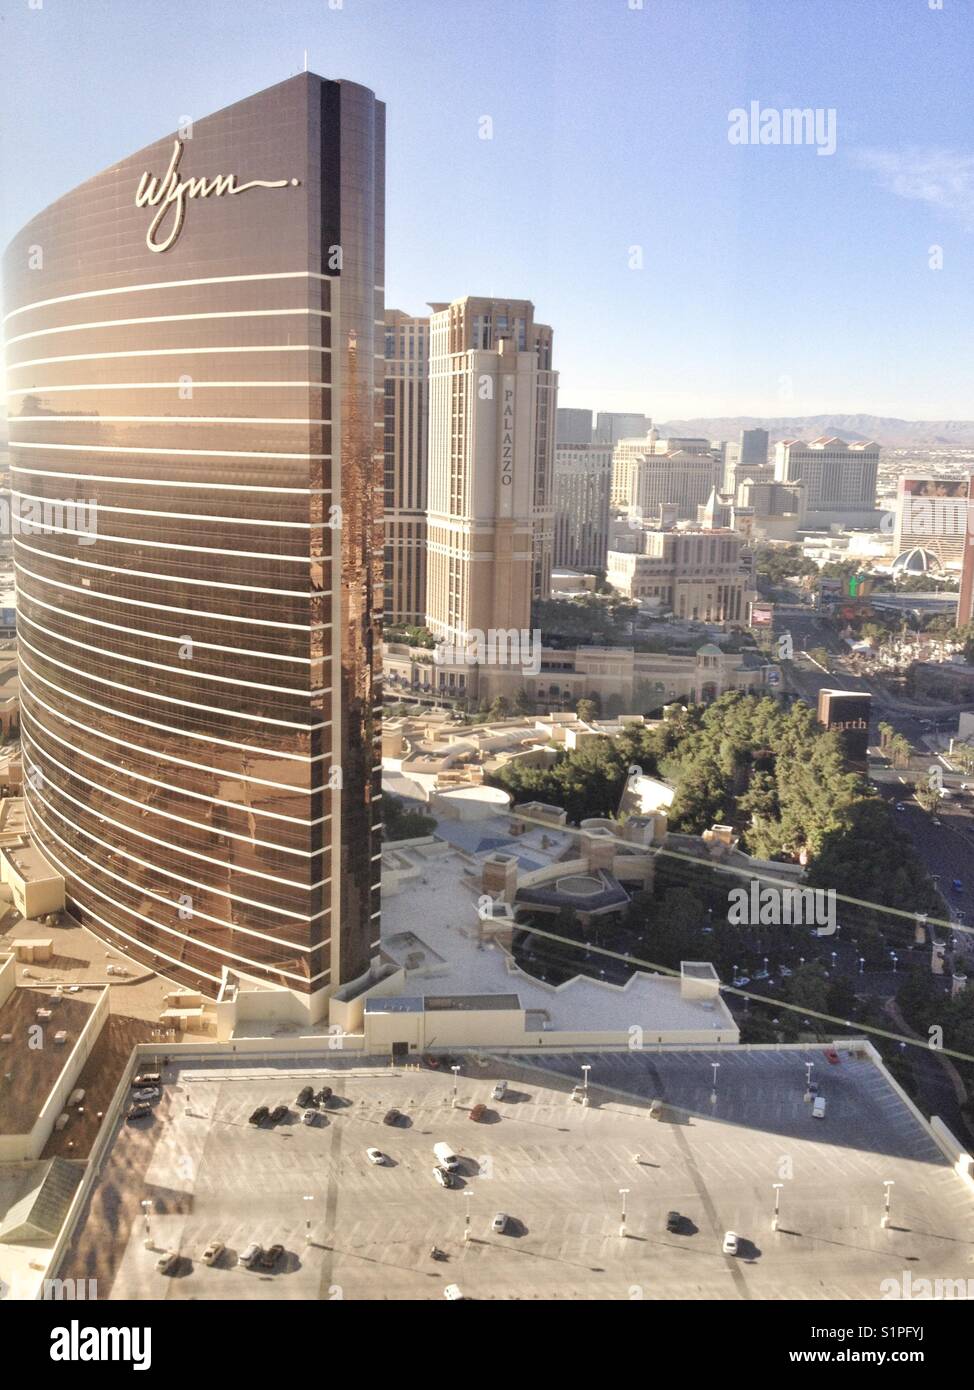 Wynn Hotel, Las Vegas Stock Photo